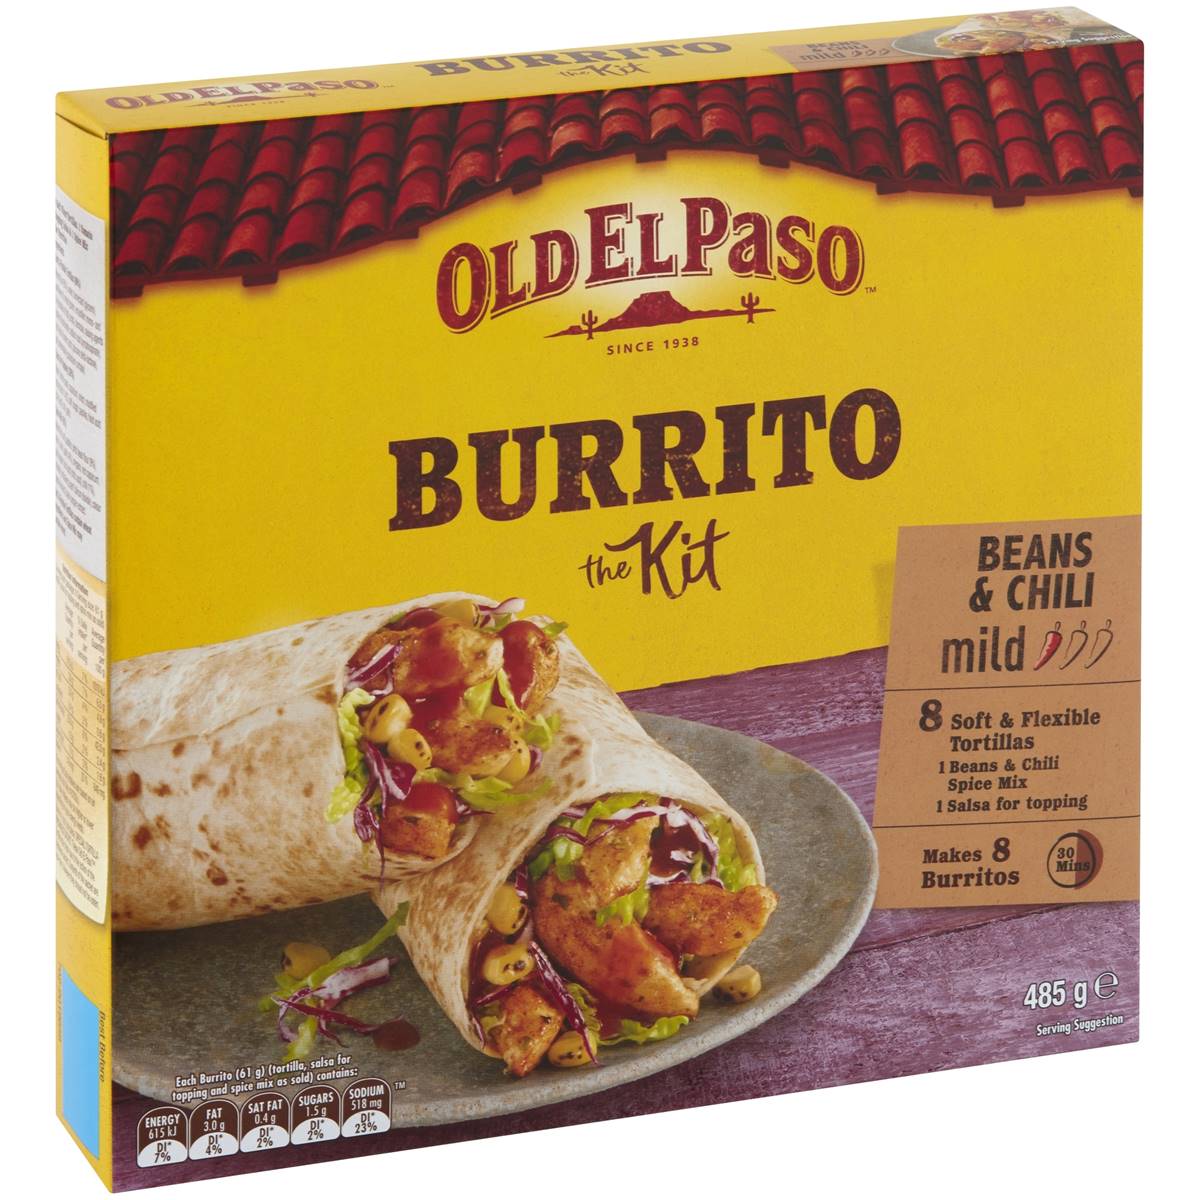 Calories in Old El Paso Burrito Dinner Kit